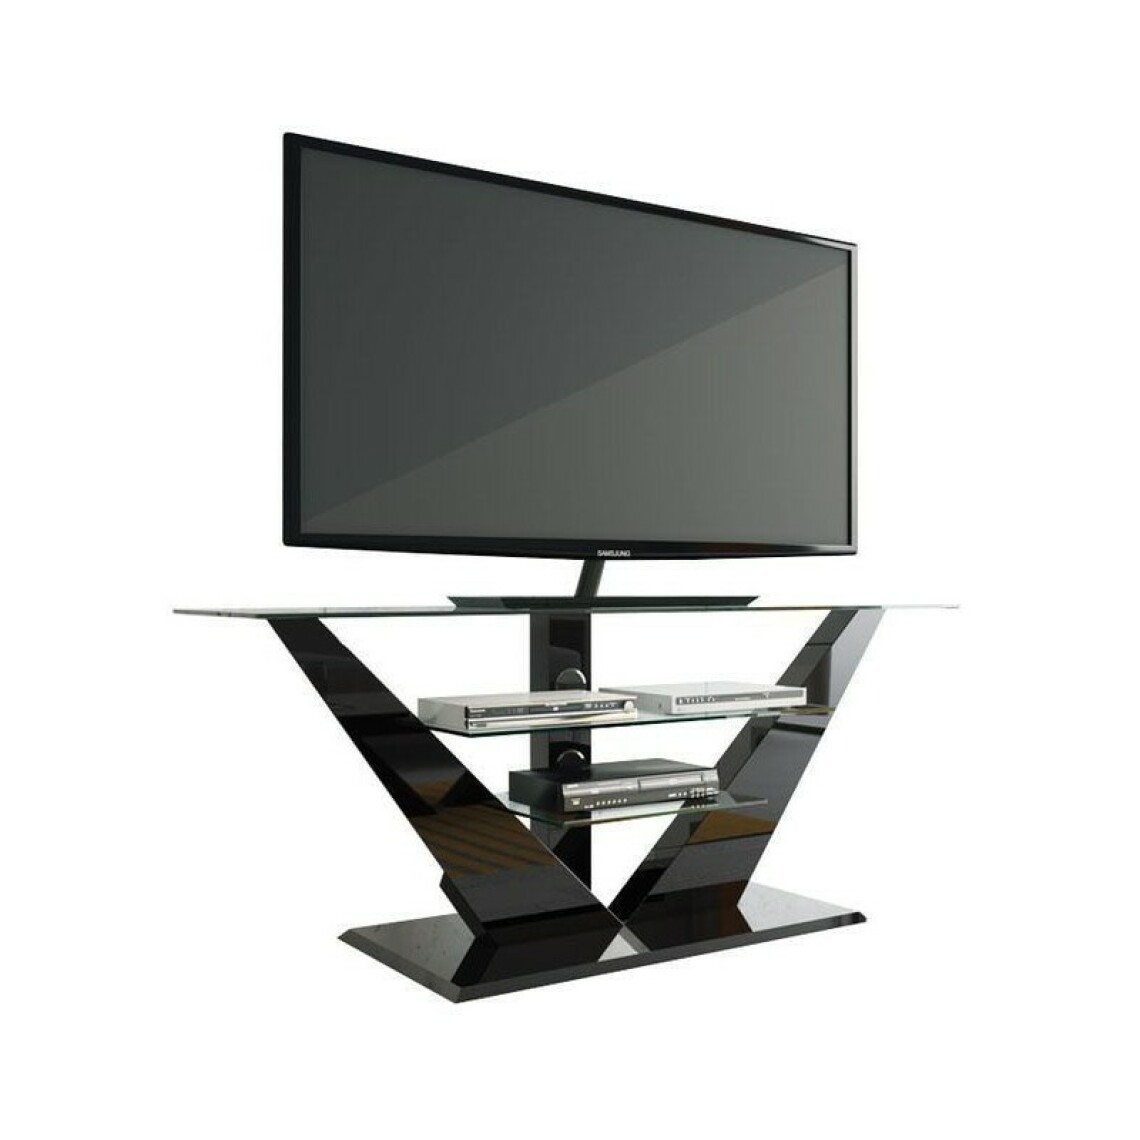 Carellia - Meuble TV design avec leds 140 cm x 53,5 cm x 65 cm - Noir - Meubles TV, Hi-Fi